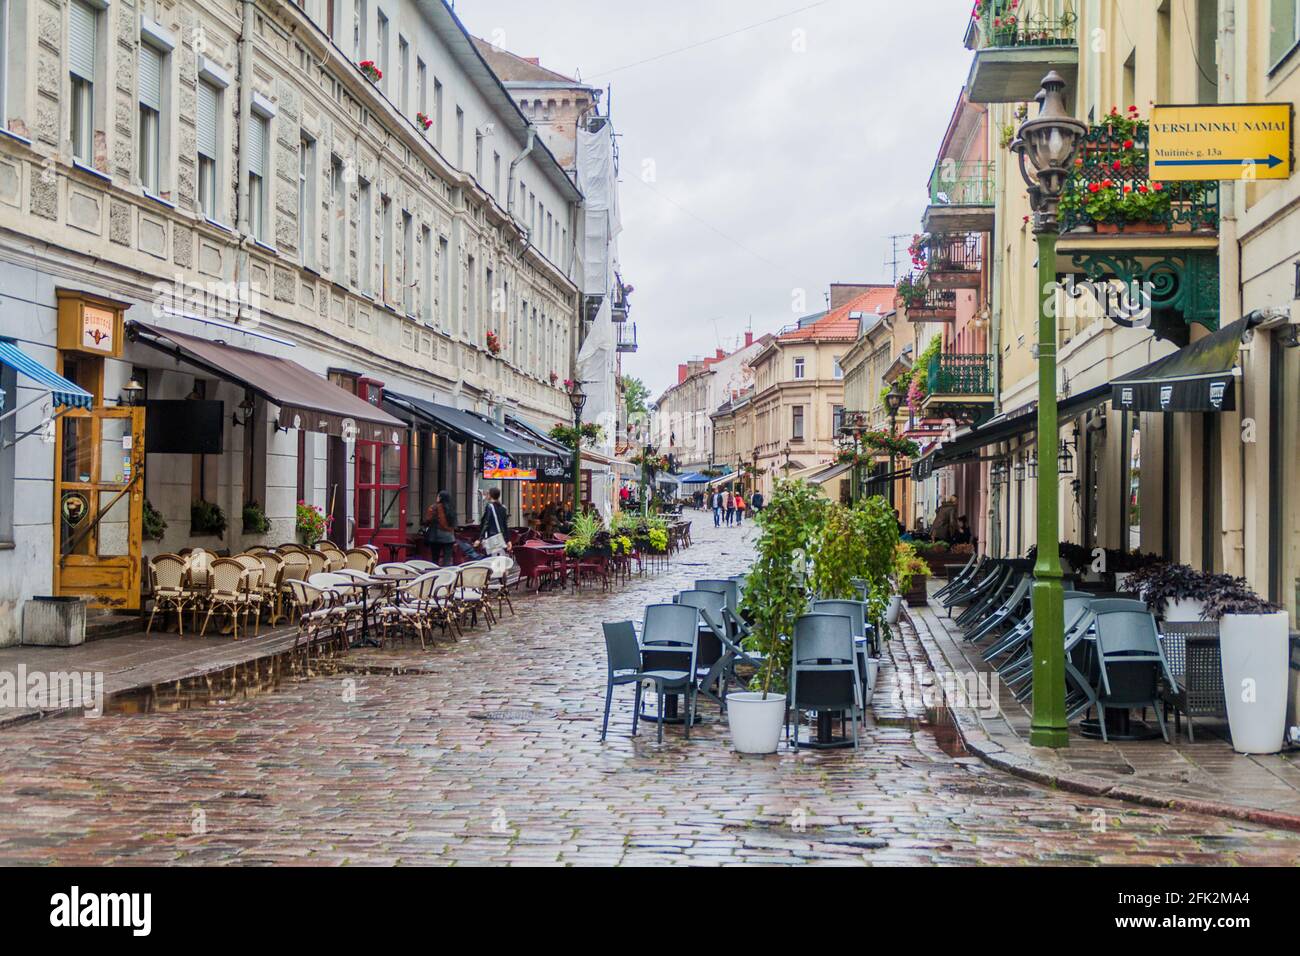 KAUNAS, LITHUANIA - AUGUST 16, 2016: Open air cafes at Vilniaus gatve street in Kaunas, Lithuania. Stock Photo